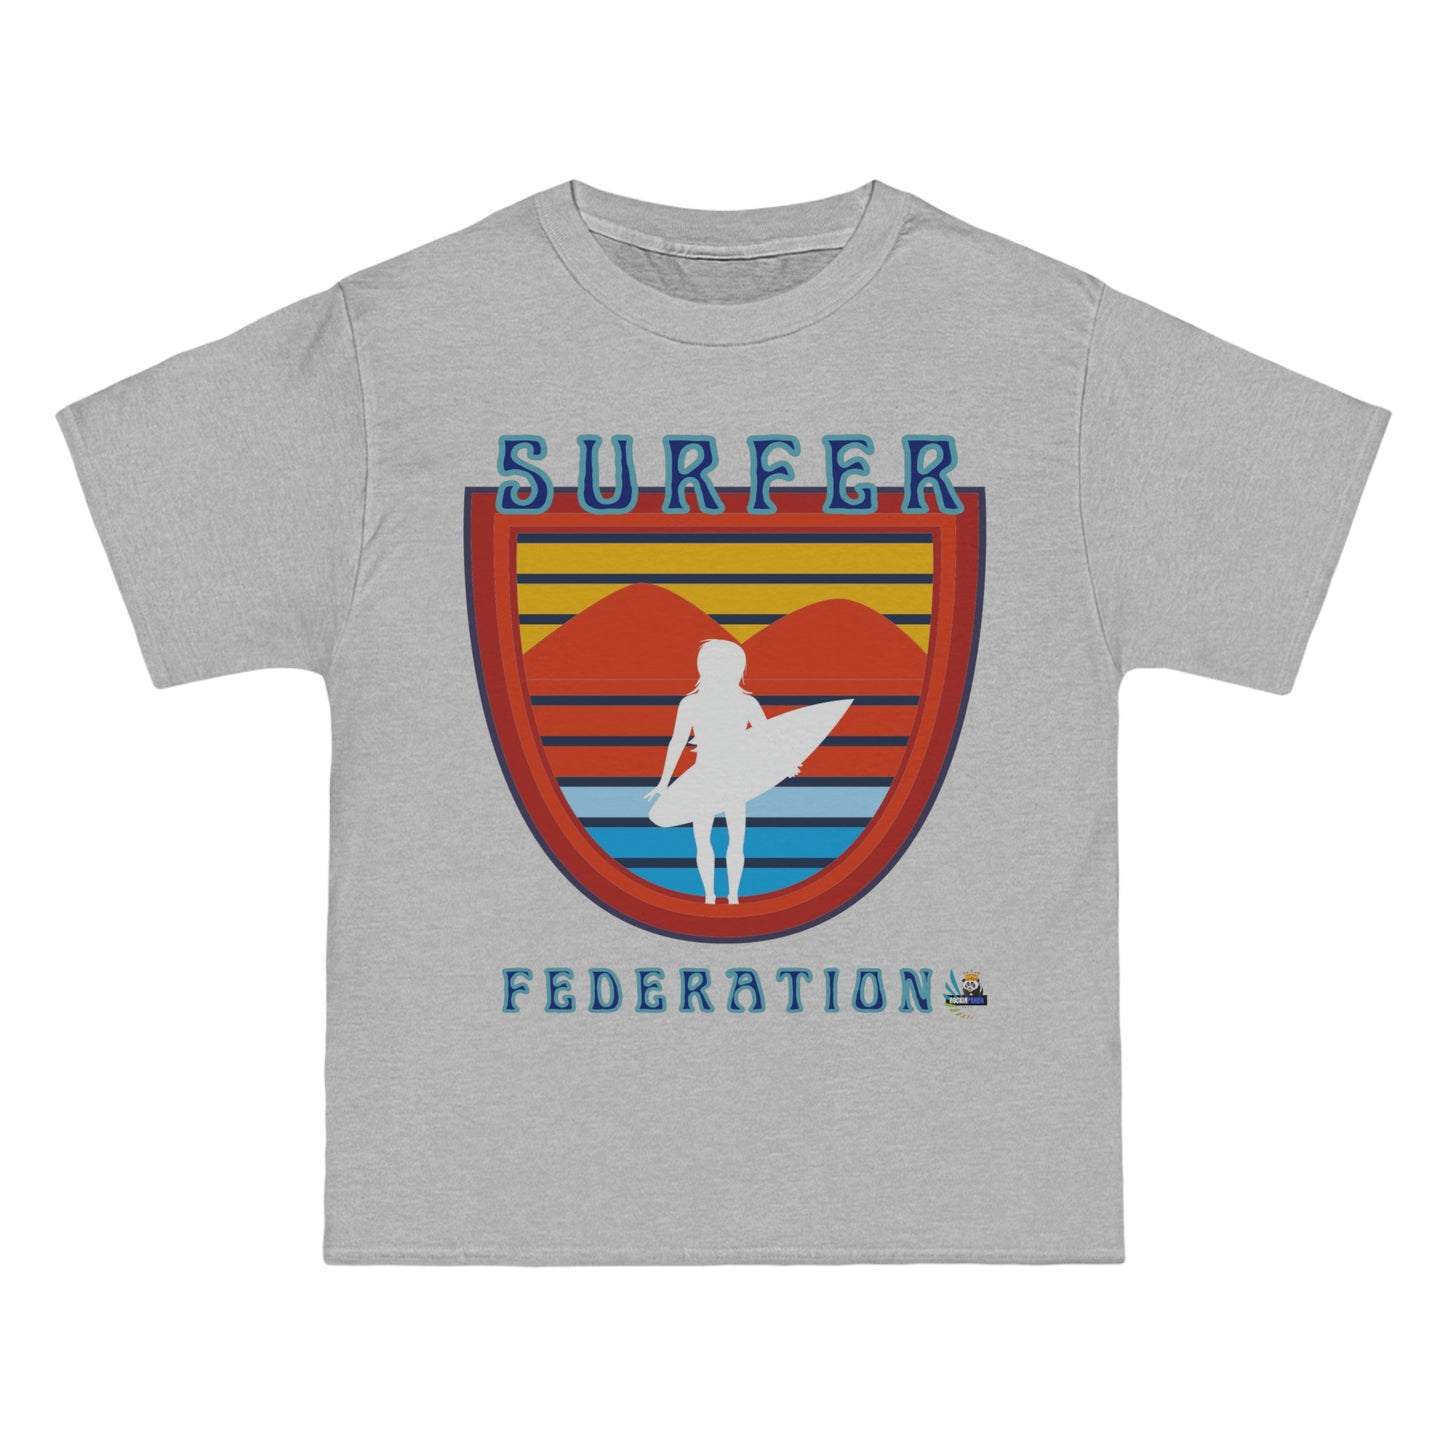 Surfer Federation League Heavyweight Tee